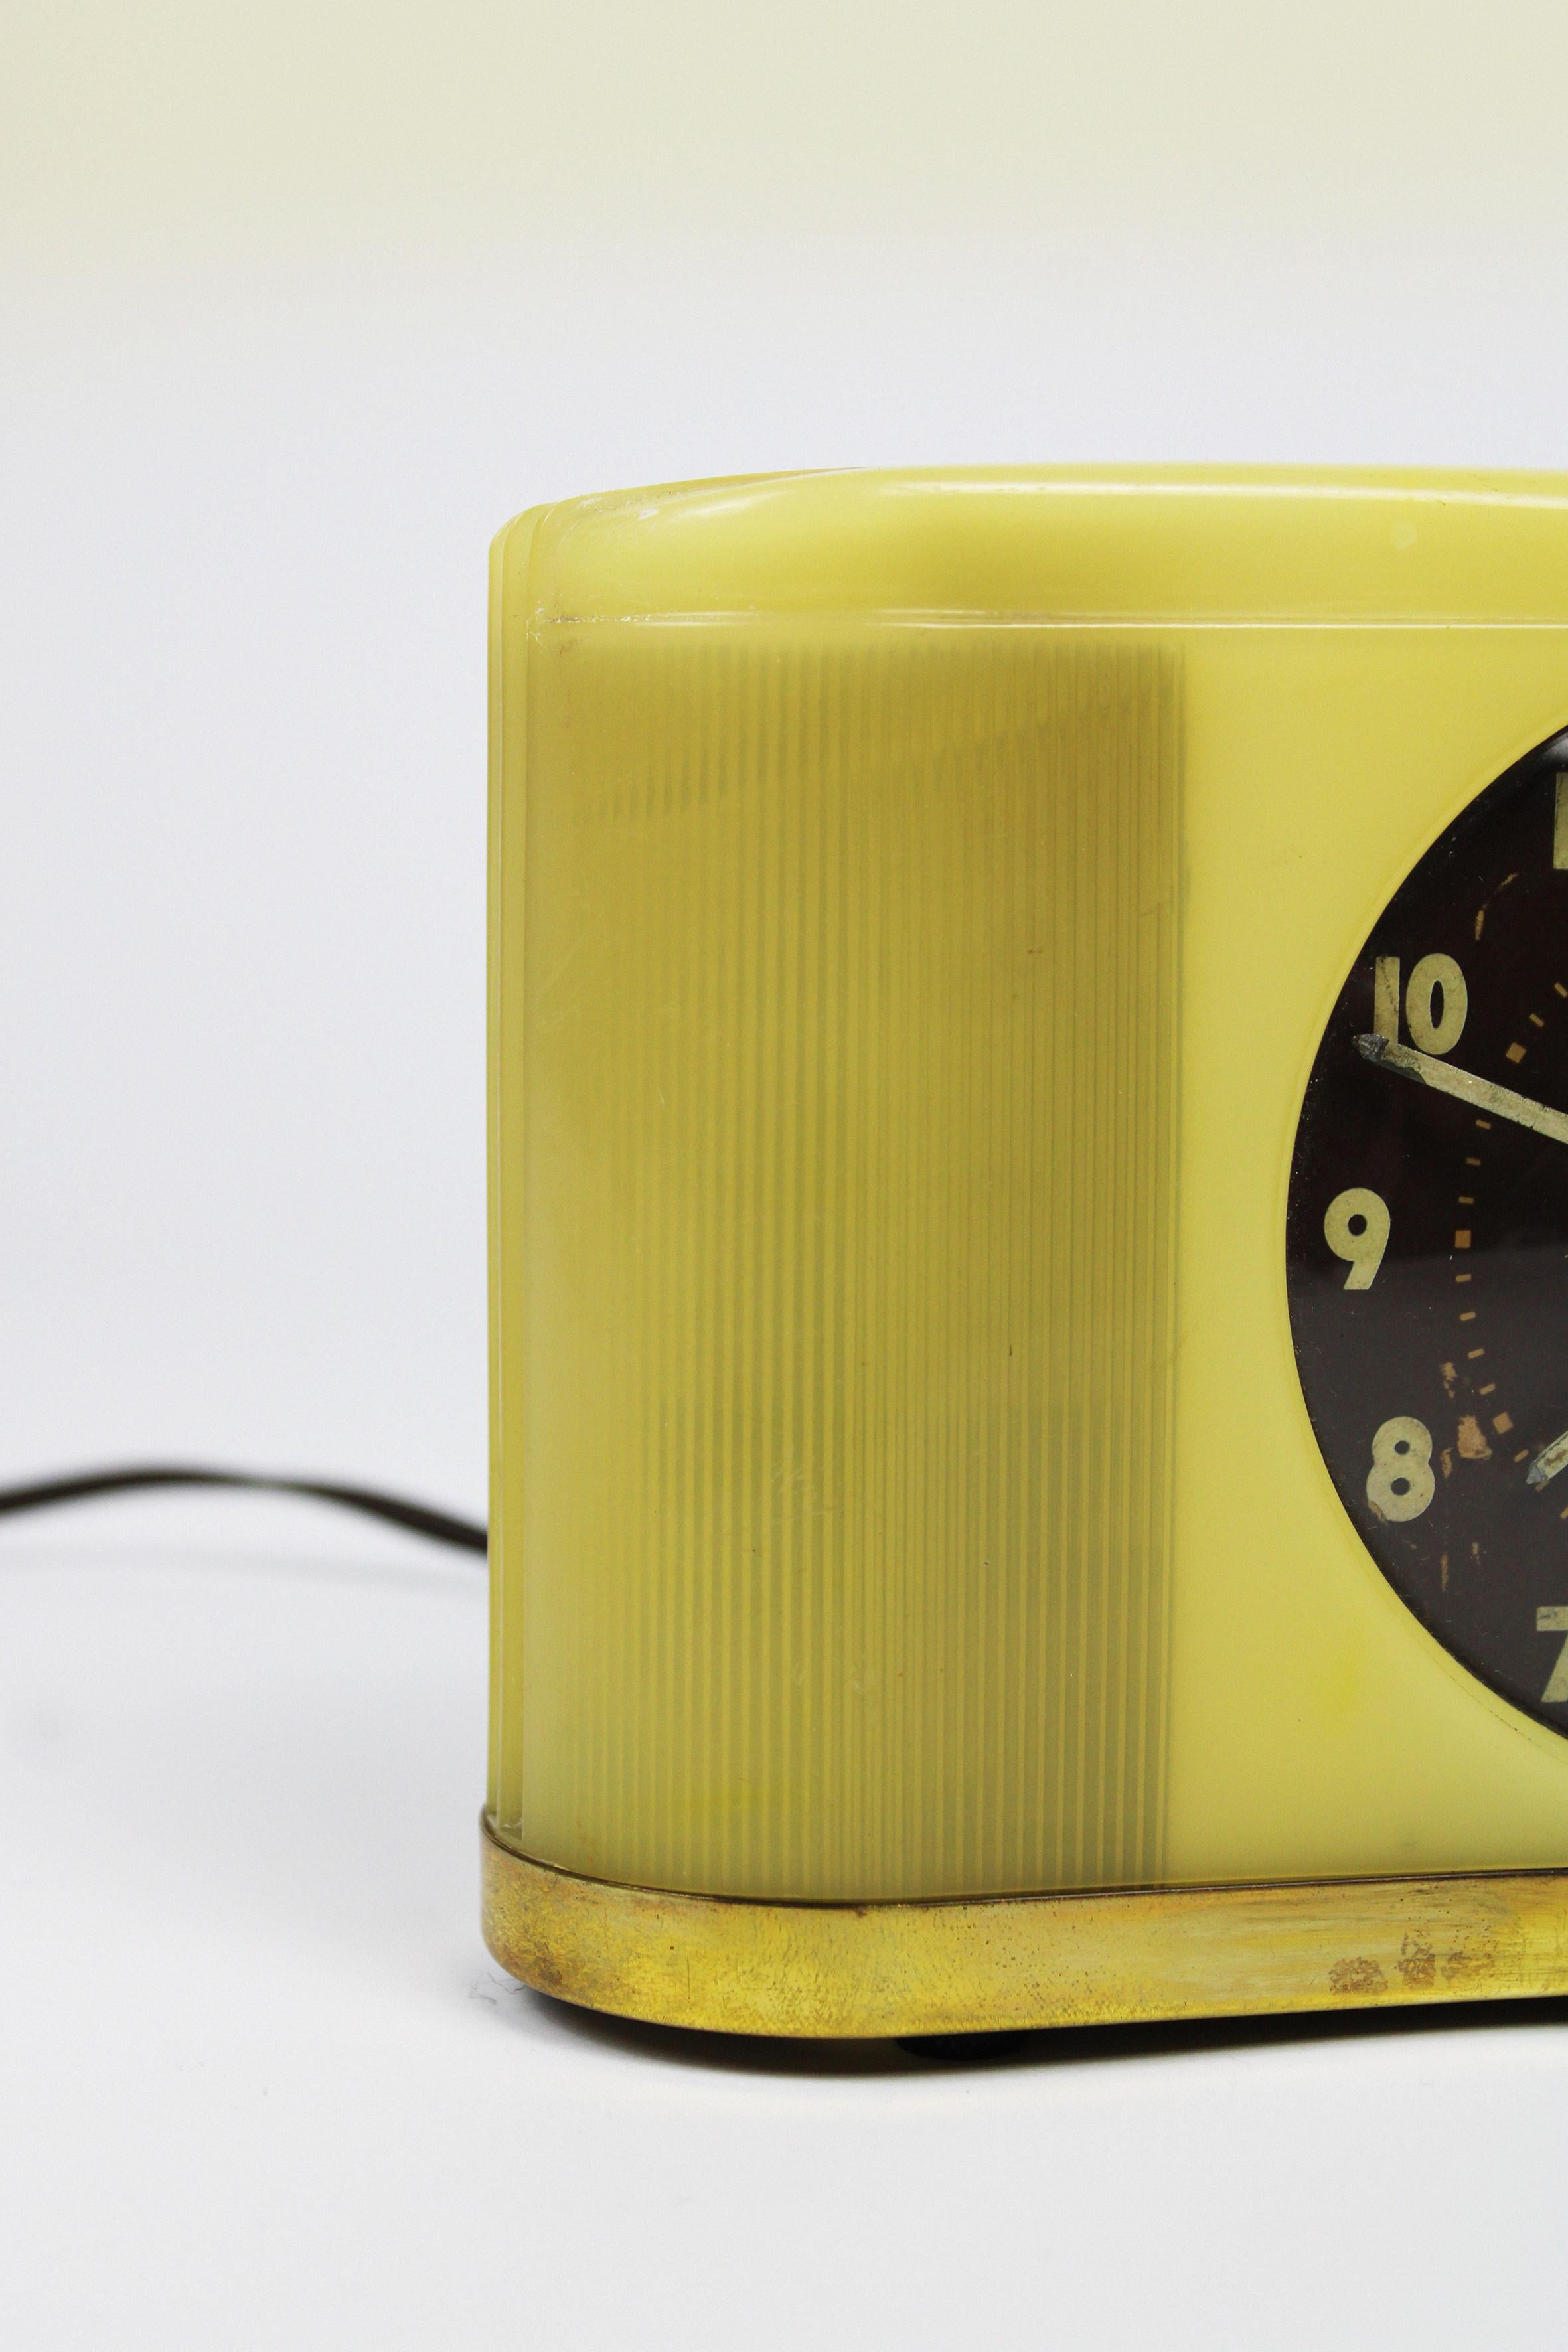 American Alarm Clock MoonBeam Westclox Yellow Bakelite Vintage Art Deco 1950s For Sale